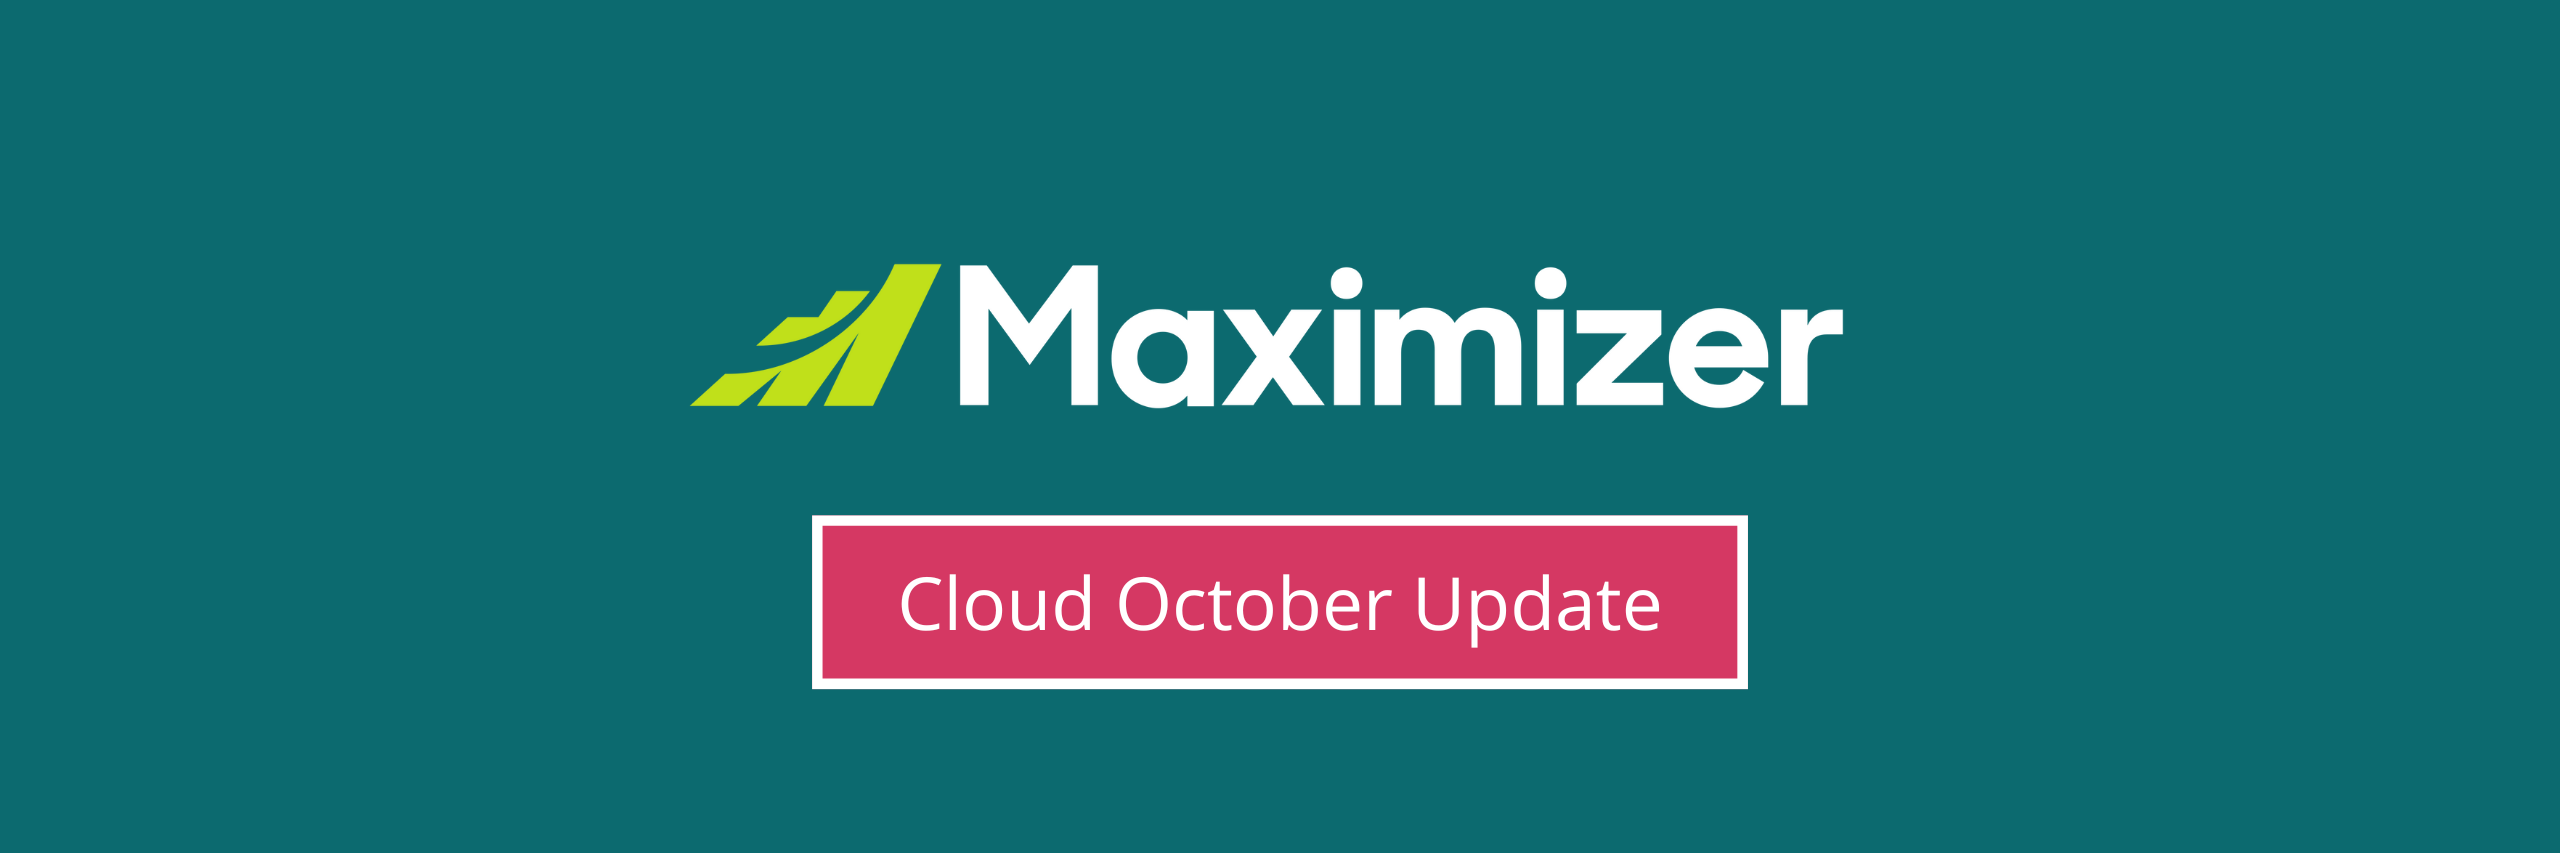 Maximizer Cloud October Update